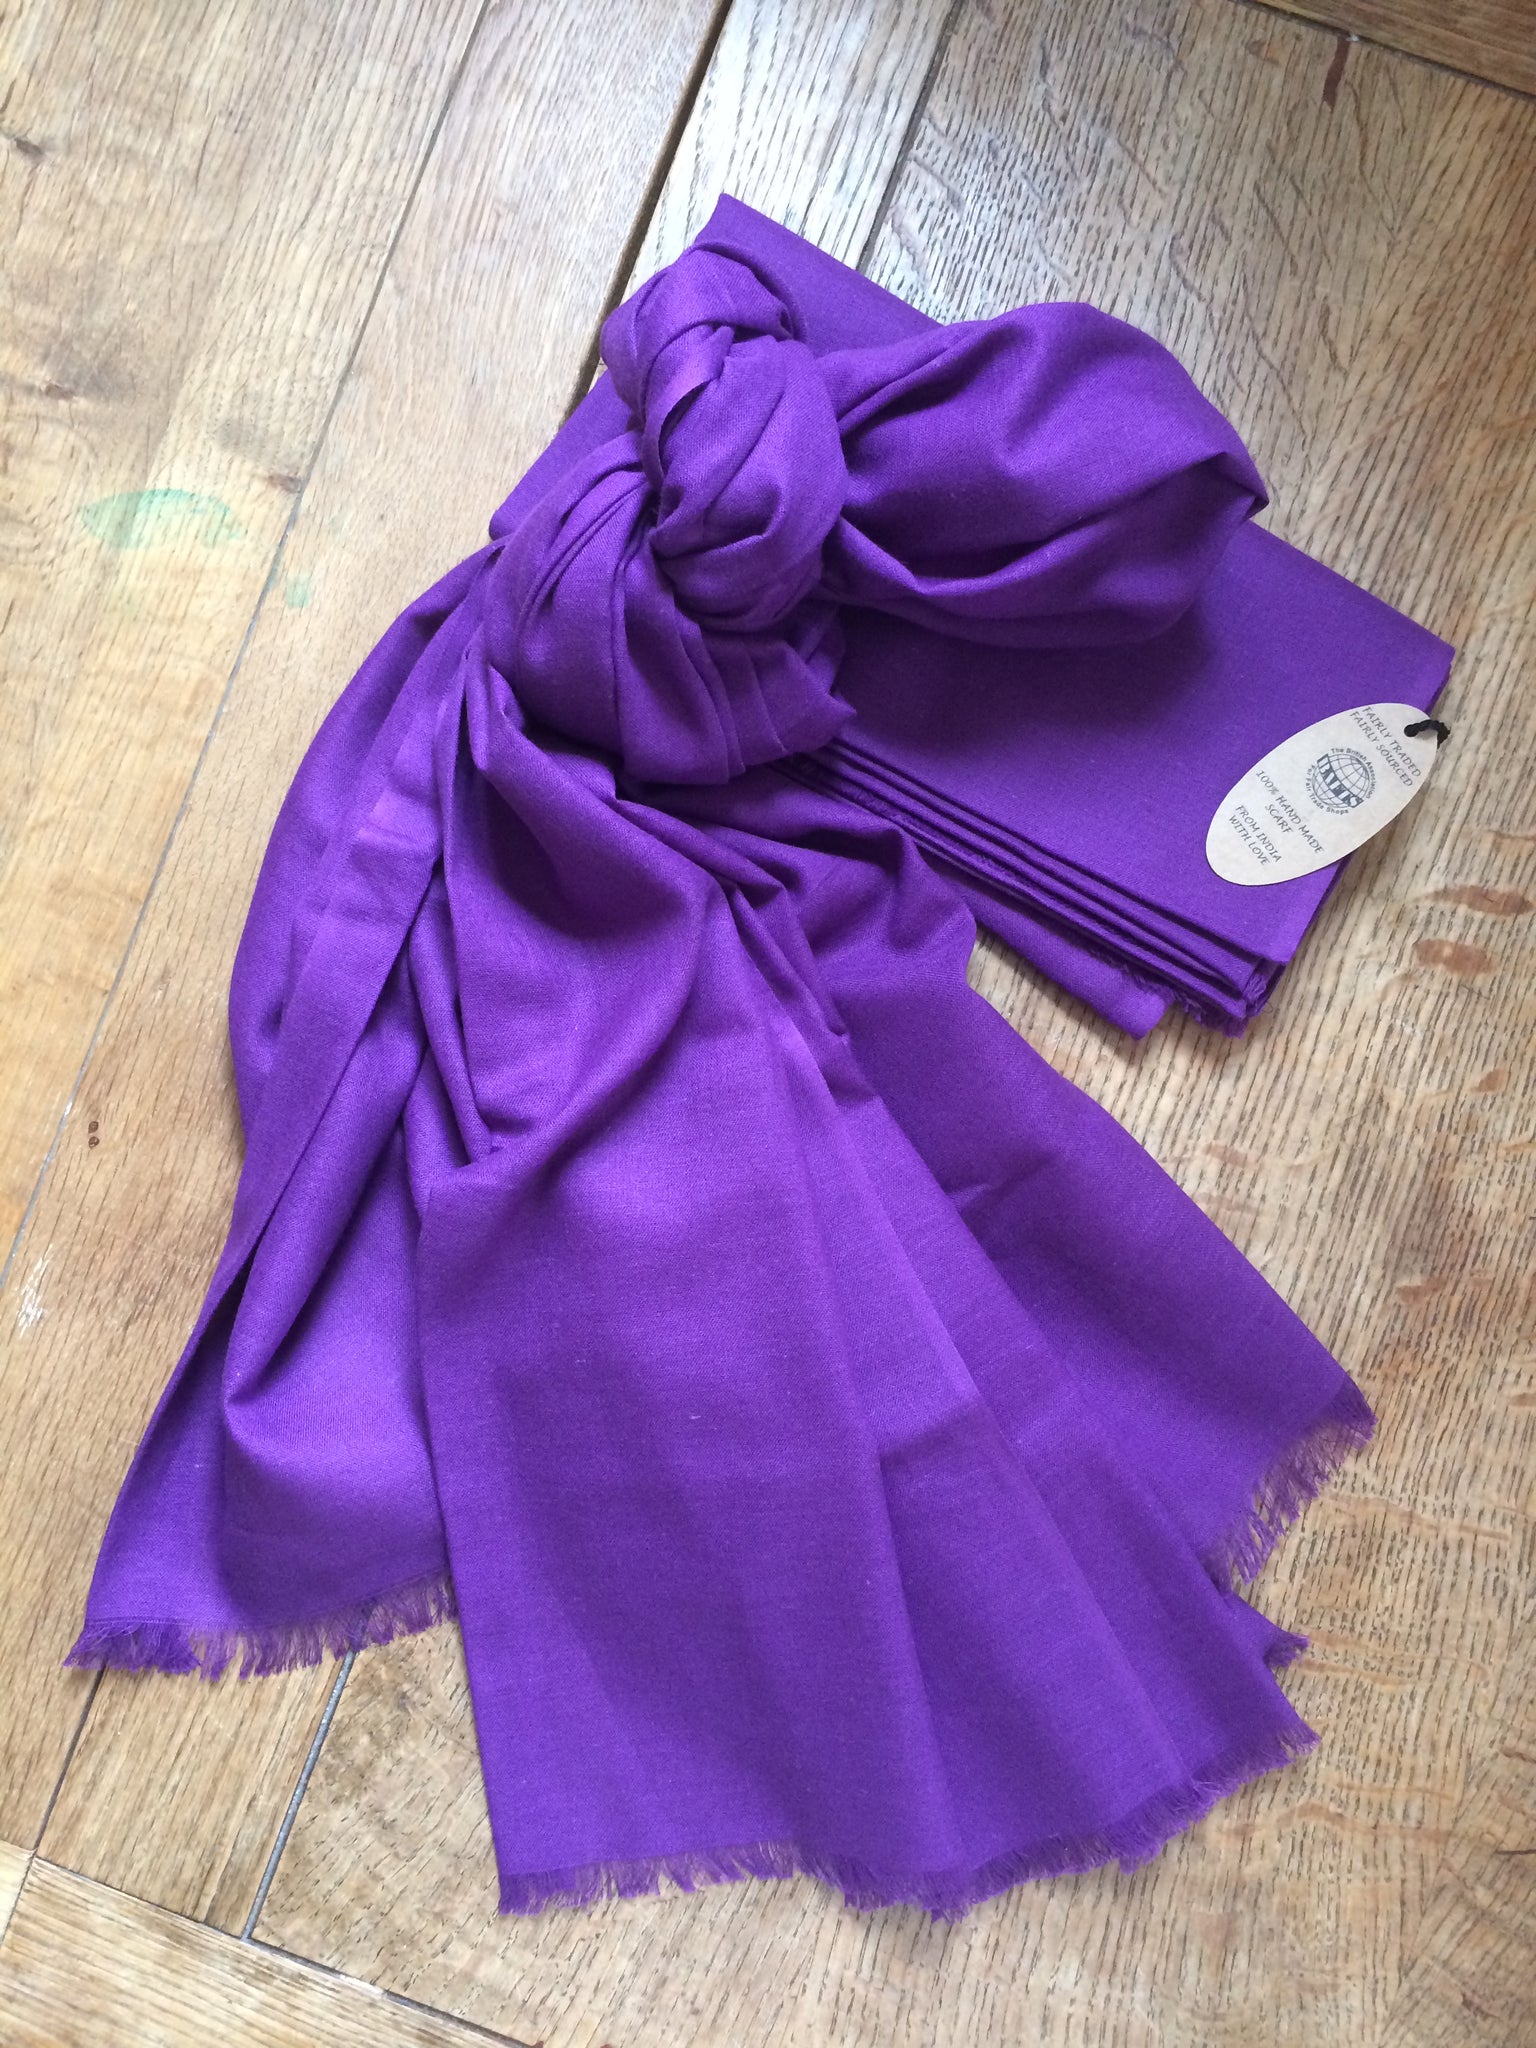 Dark purple fairtrade organic cotton shawl.